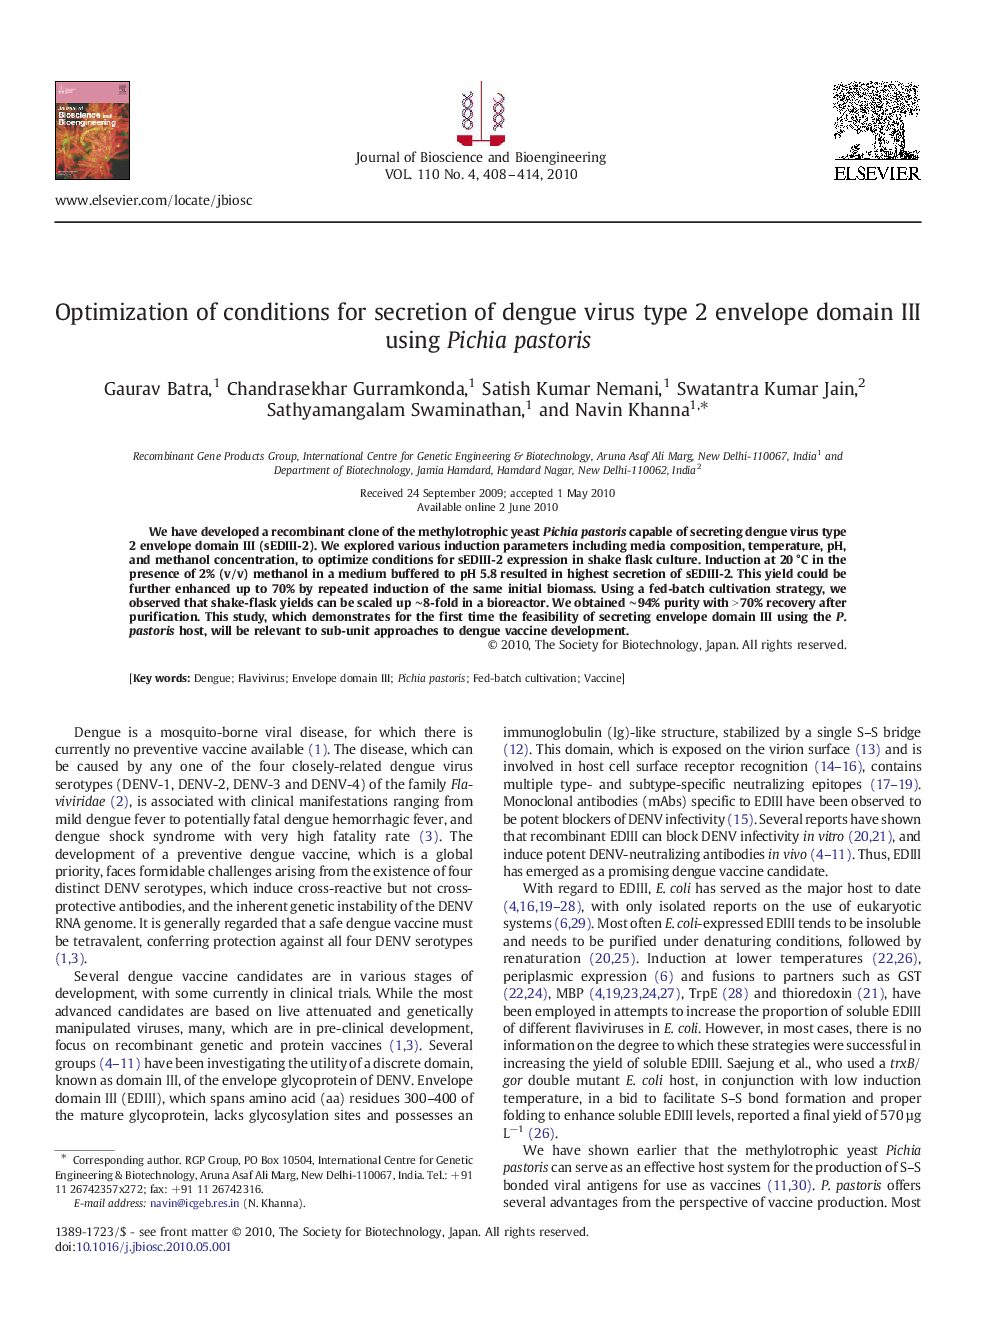 Optimization of conditions for secretion of dengue virus type 2 envelope domain III using Pichia pastoris